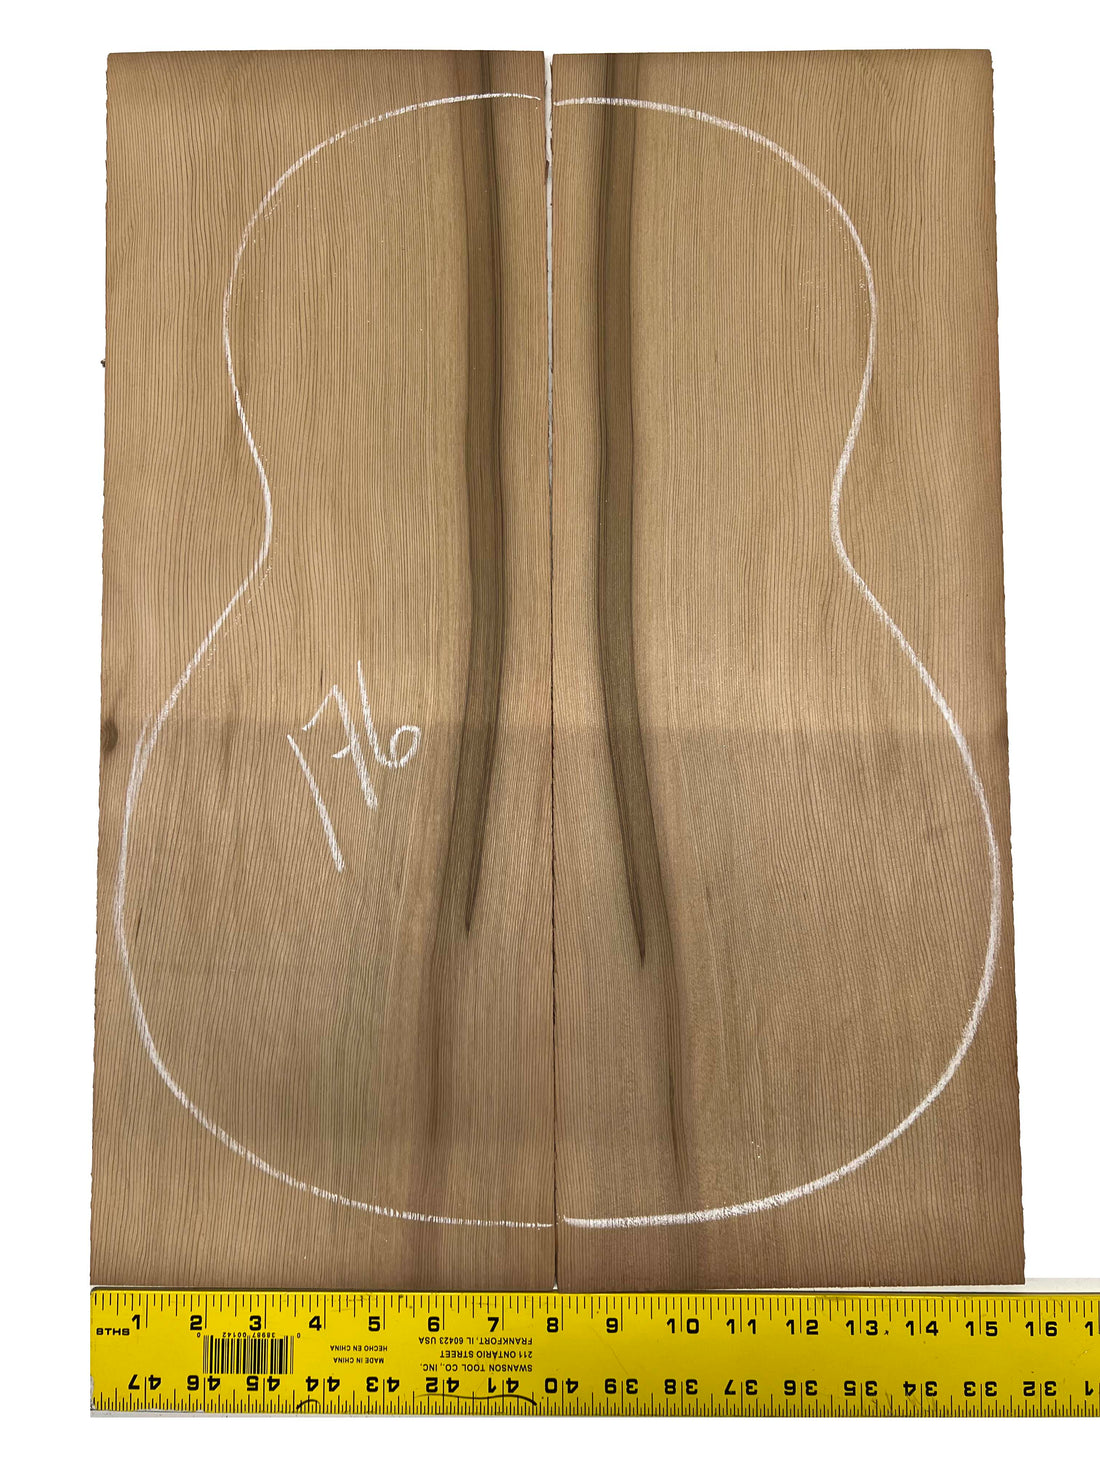 Spanish Cedar Guitar Back Classical Luthier tonewood -21&quot; x 7-3/4&quot; x 1/8&quot; 